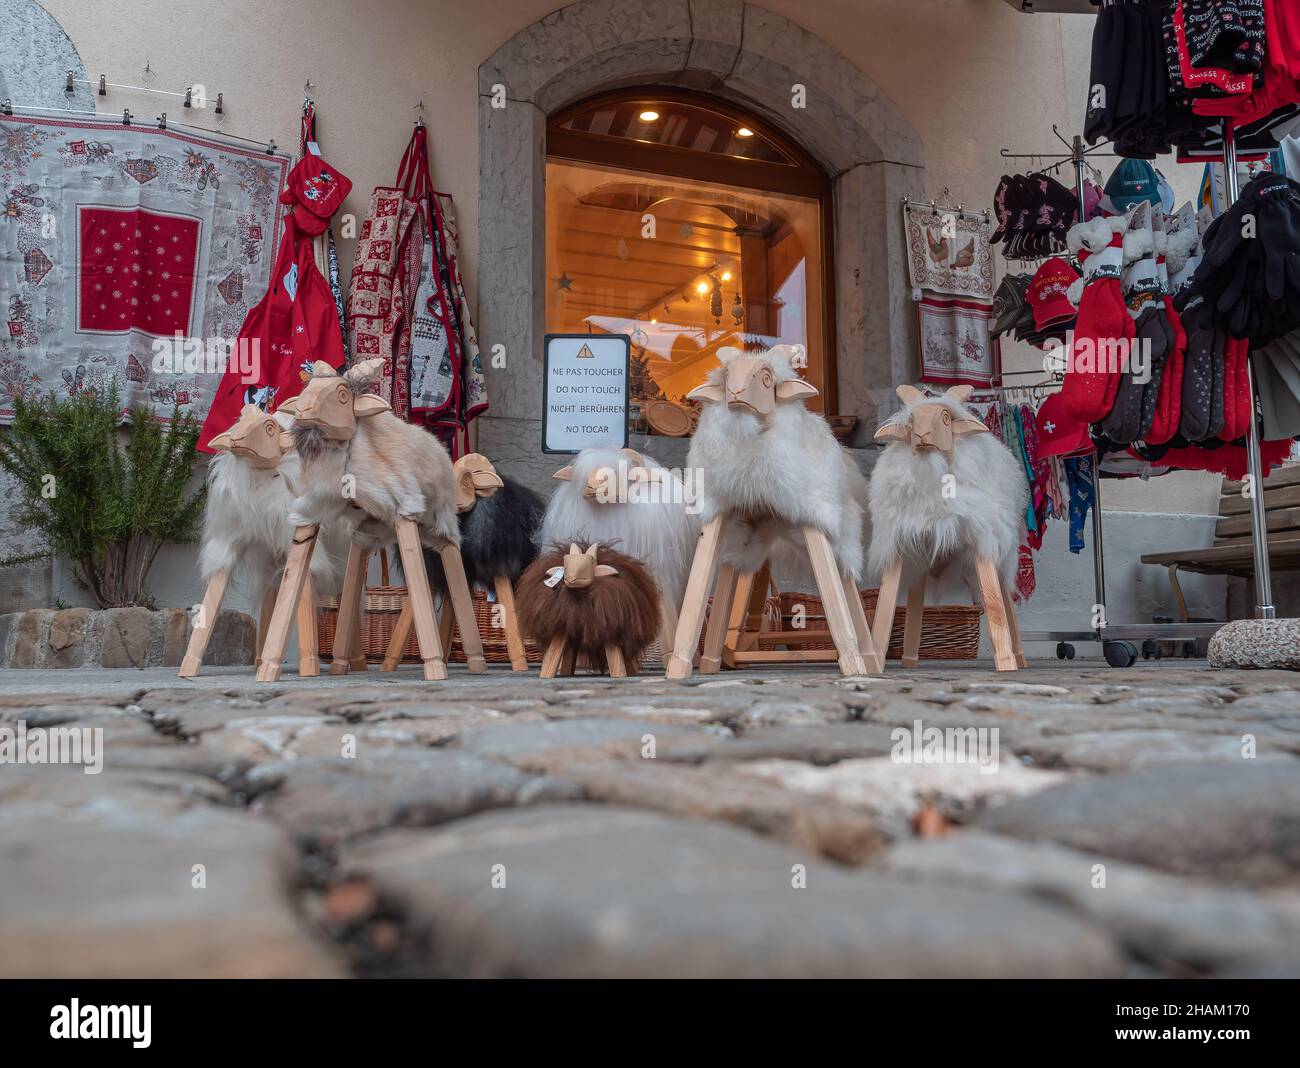 Gruyeres, Switzerland - November 23, 2021: Sheep figurines in front of a souvenir shop in Gruyeres Stock Photo